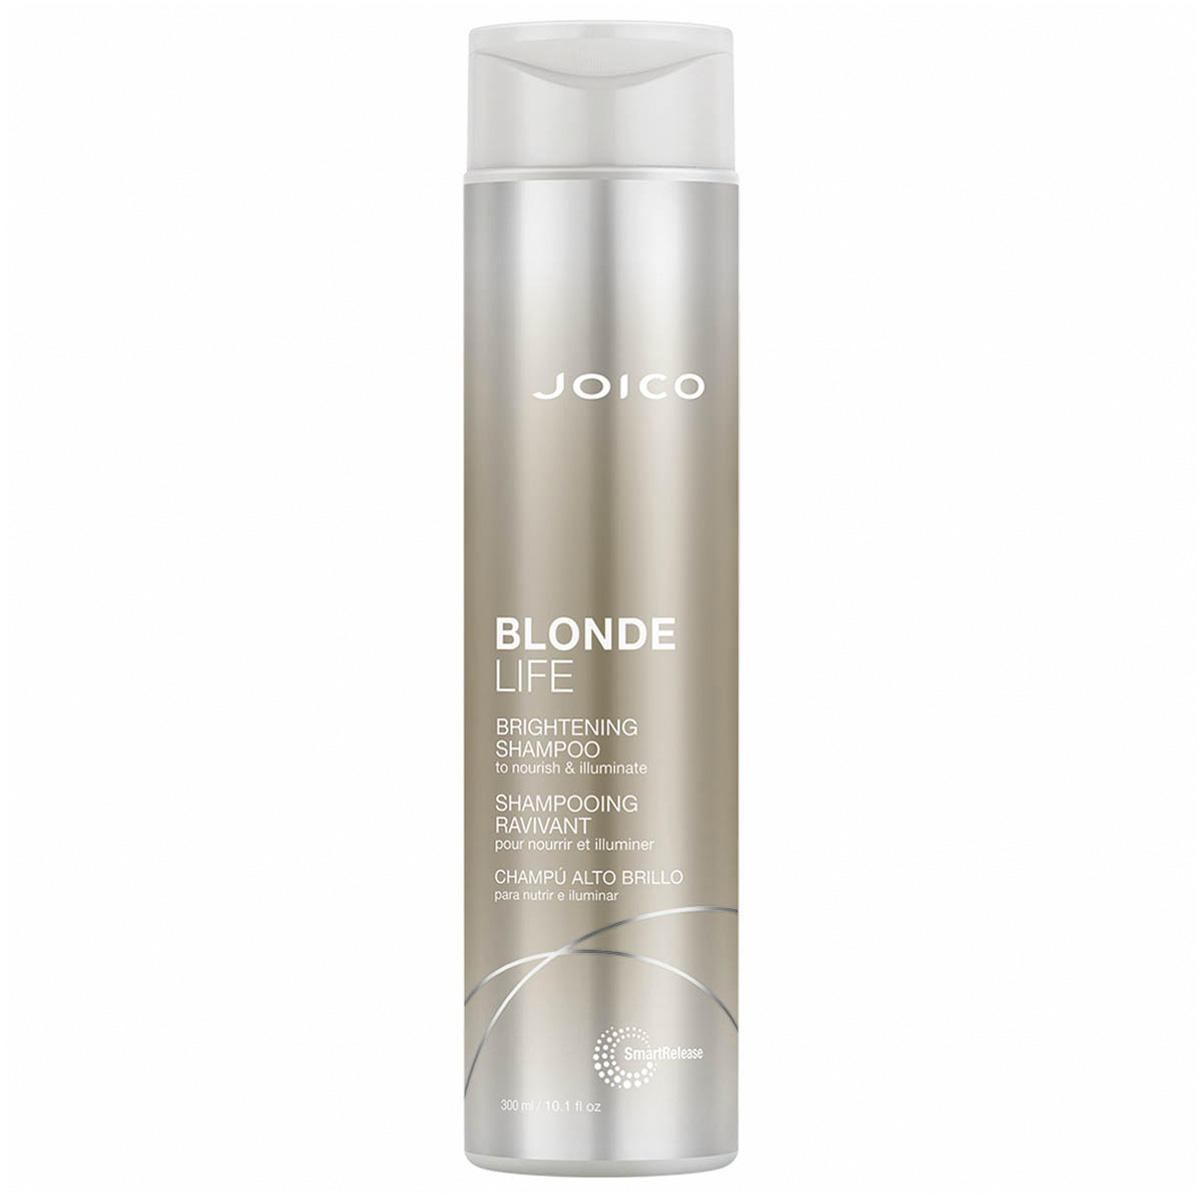 JOICO BLONDE LIFE Brightening Shampoo  - 1